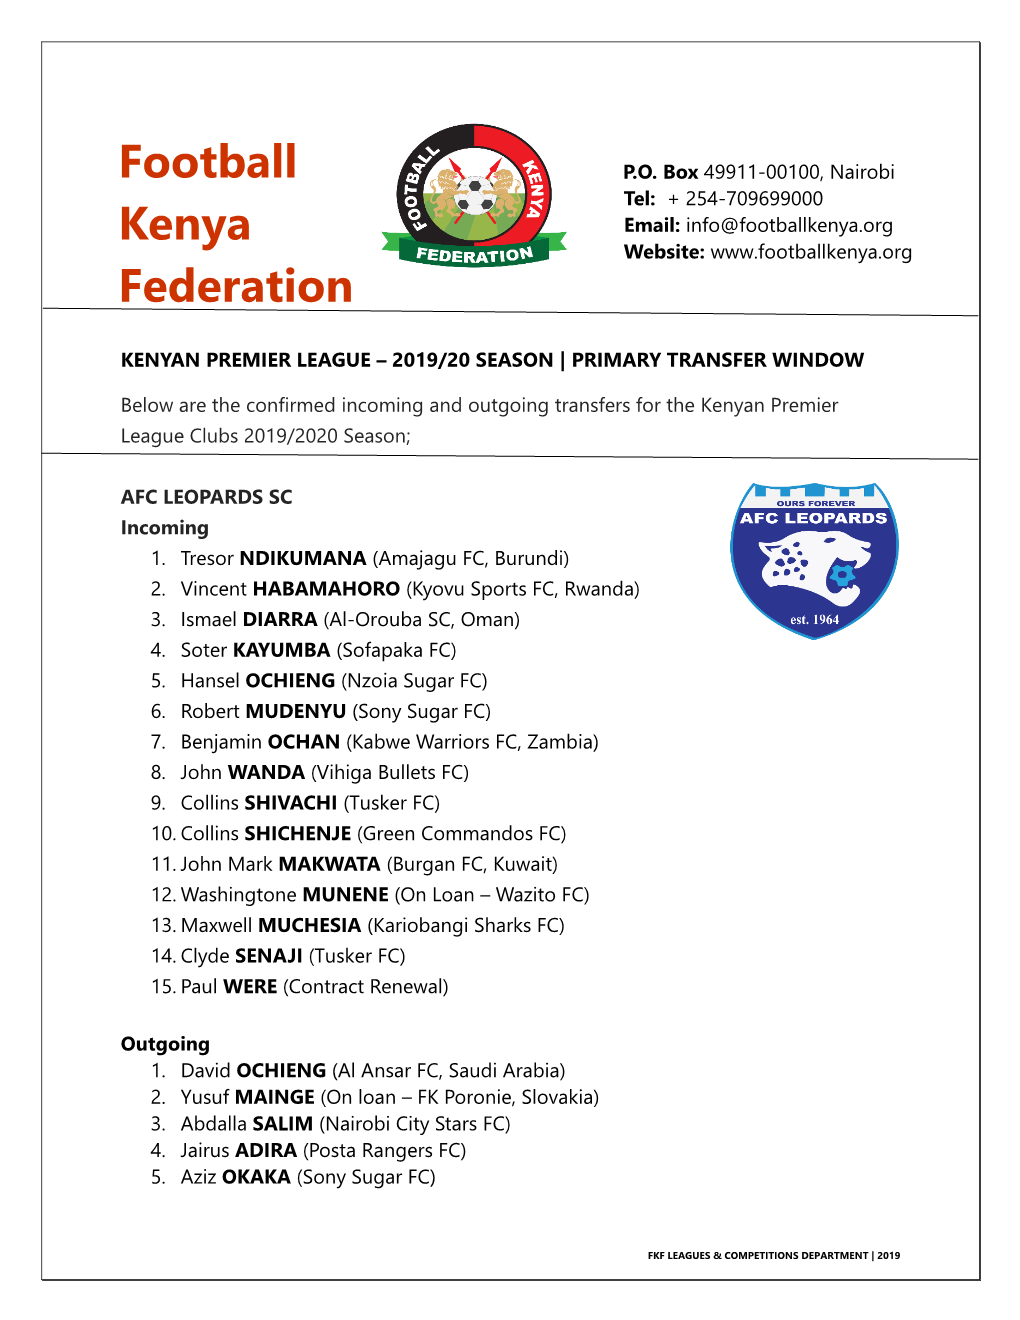 Football Kenya Federation